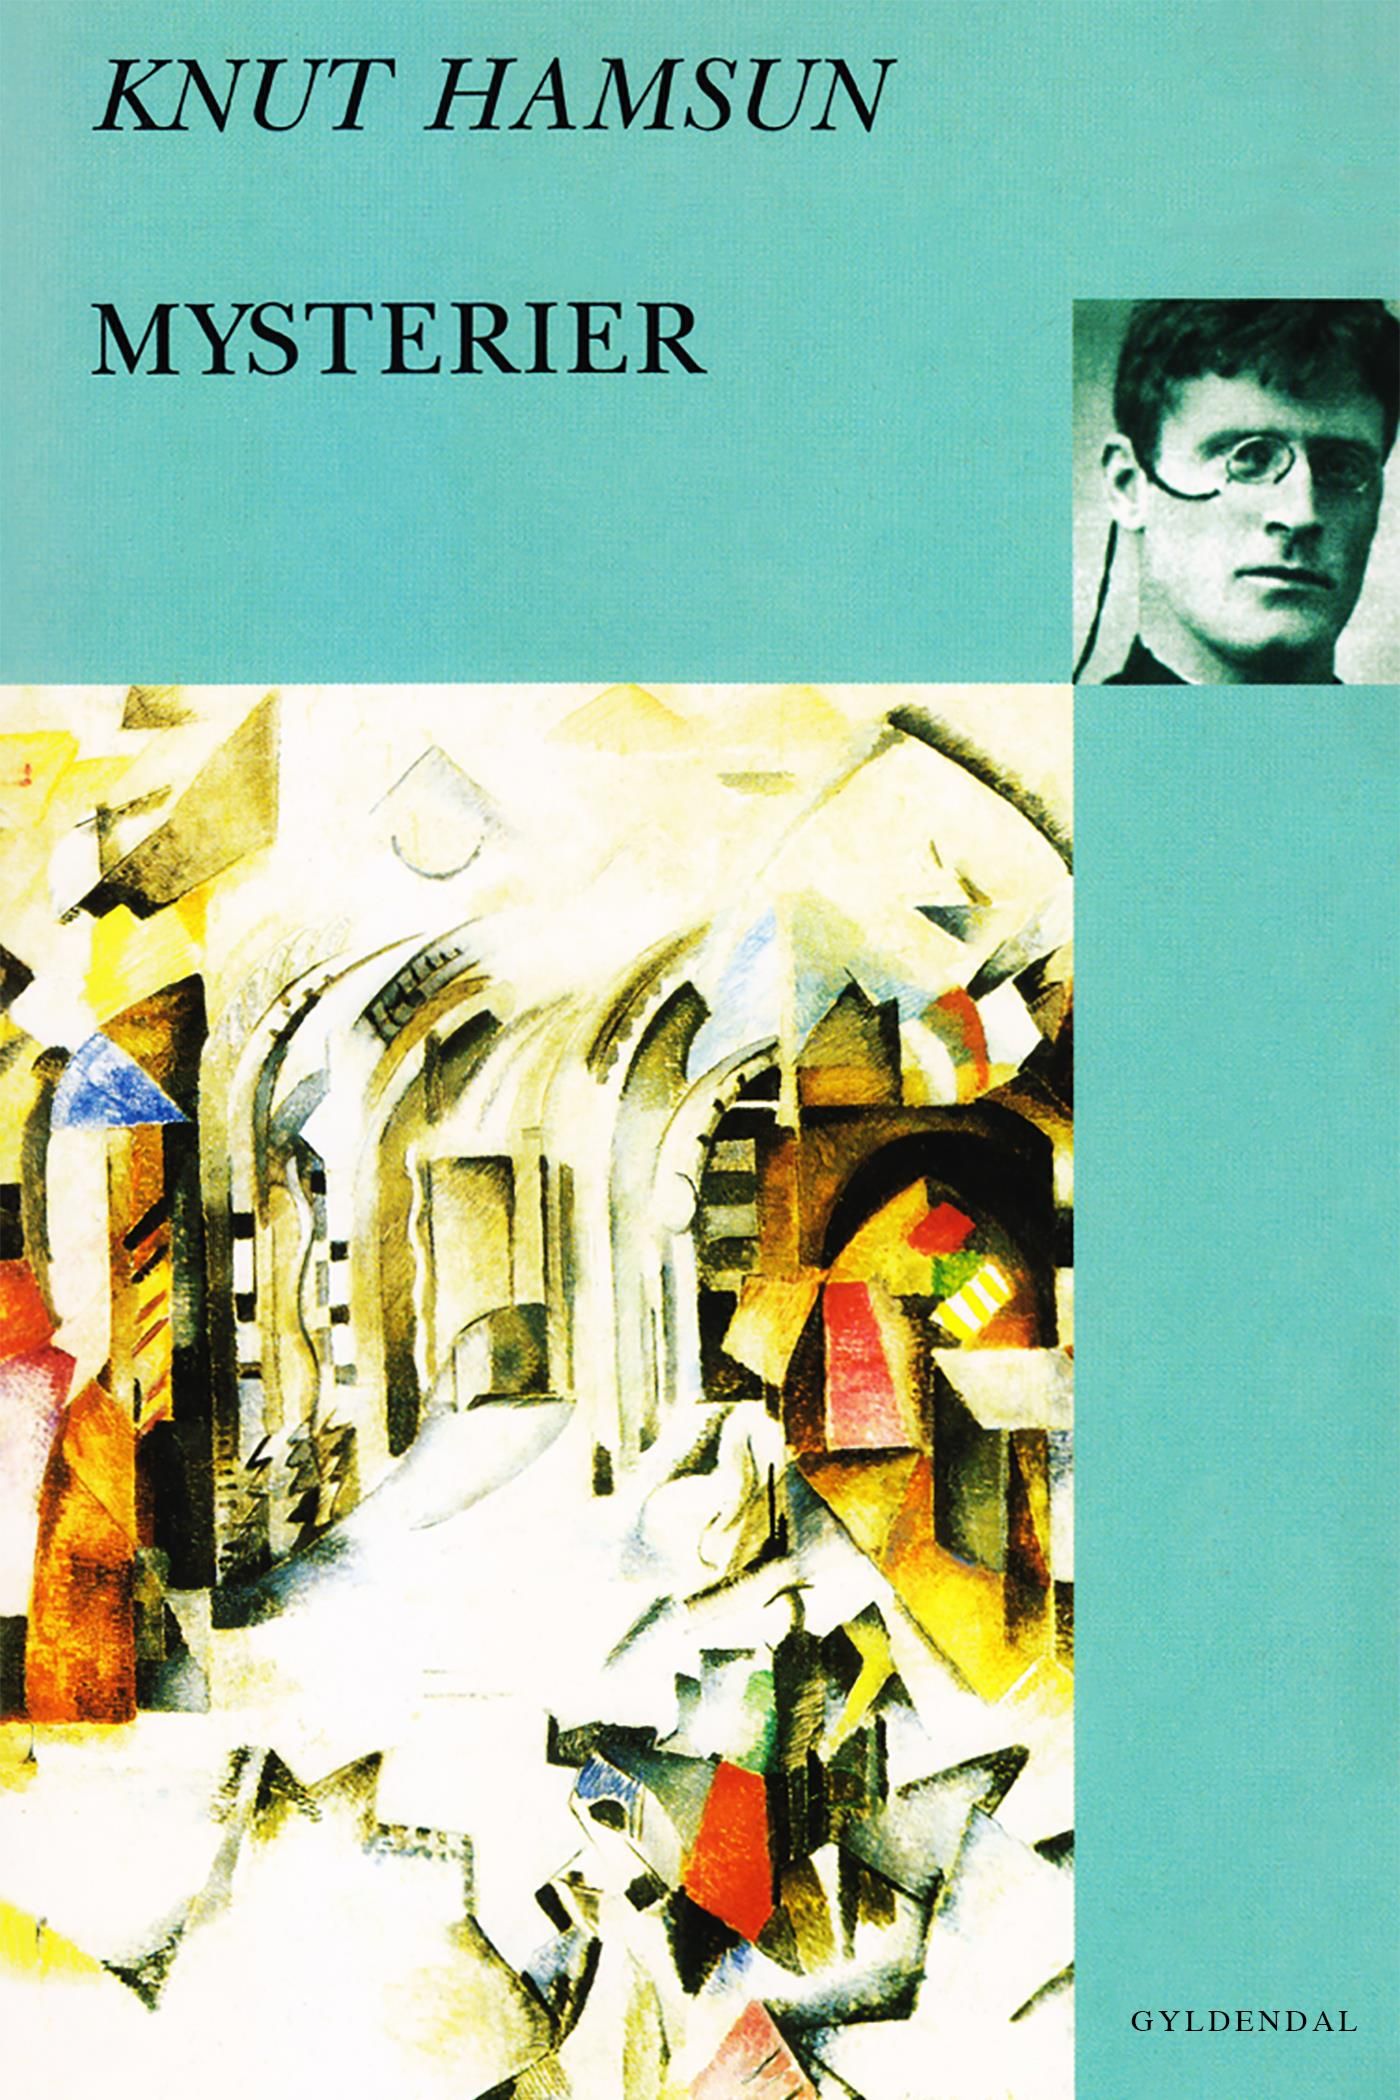 Mysterier, eBook by Knut Hamsun